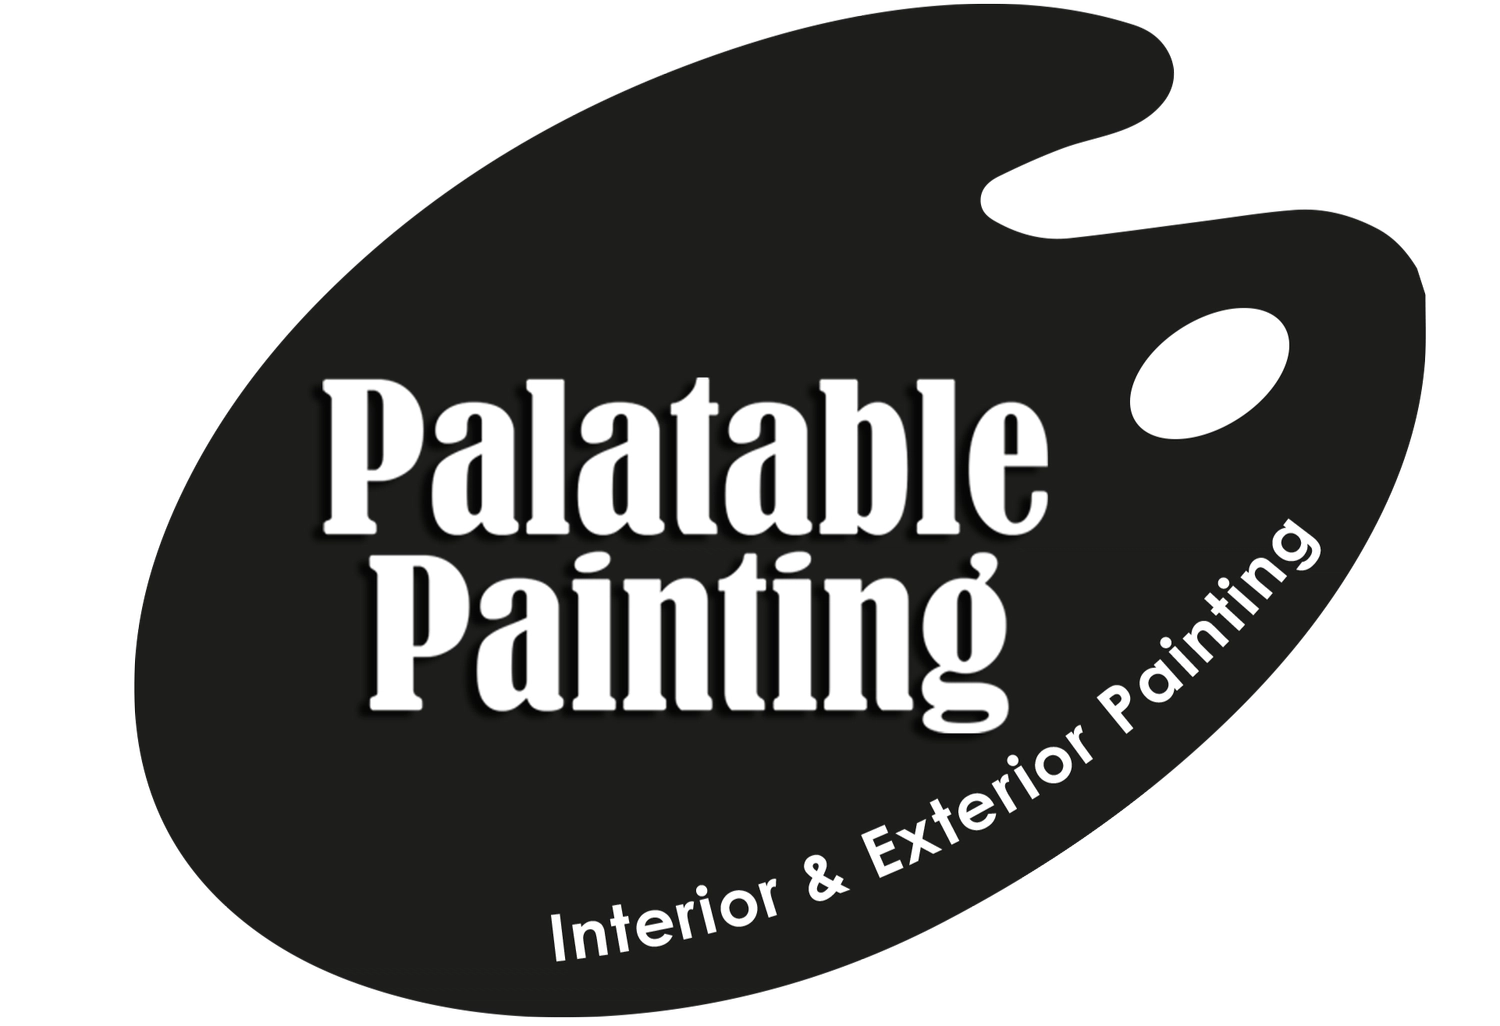 Palatable Painting Logo